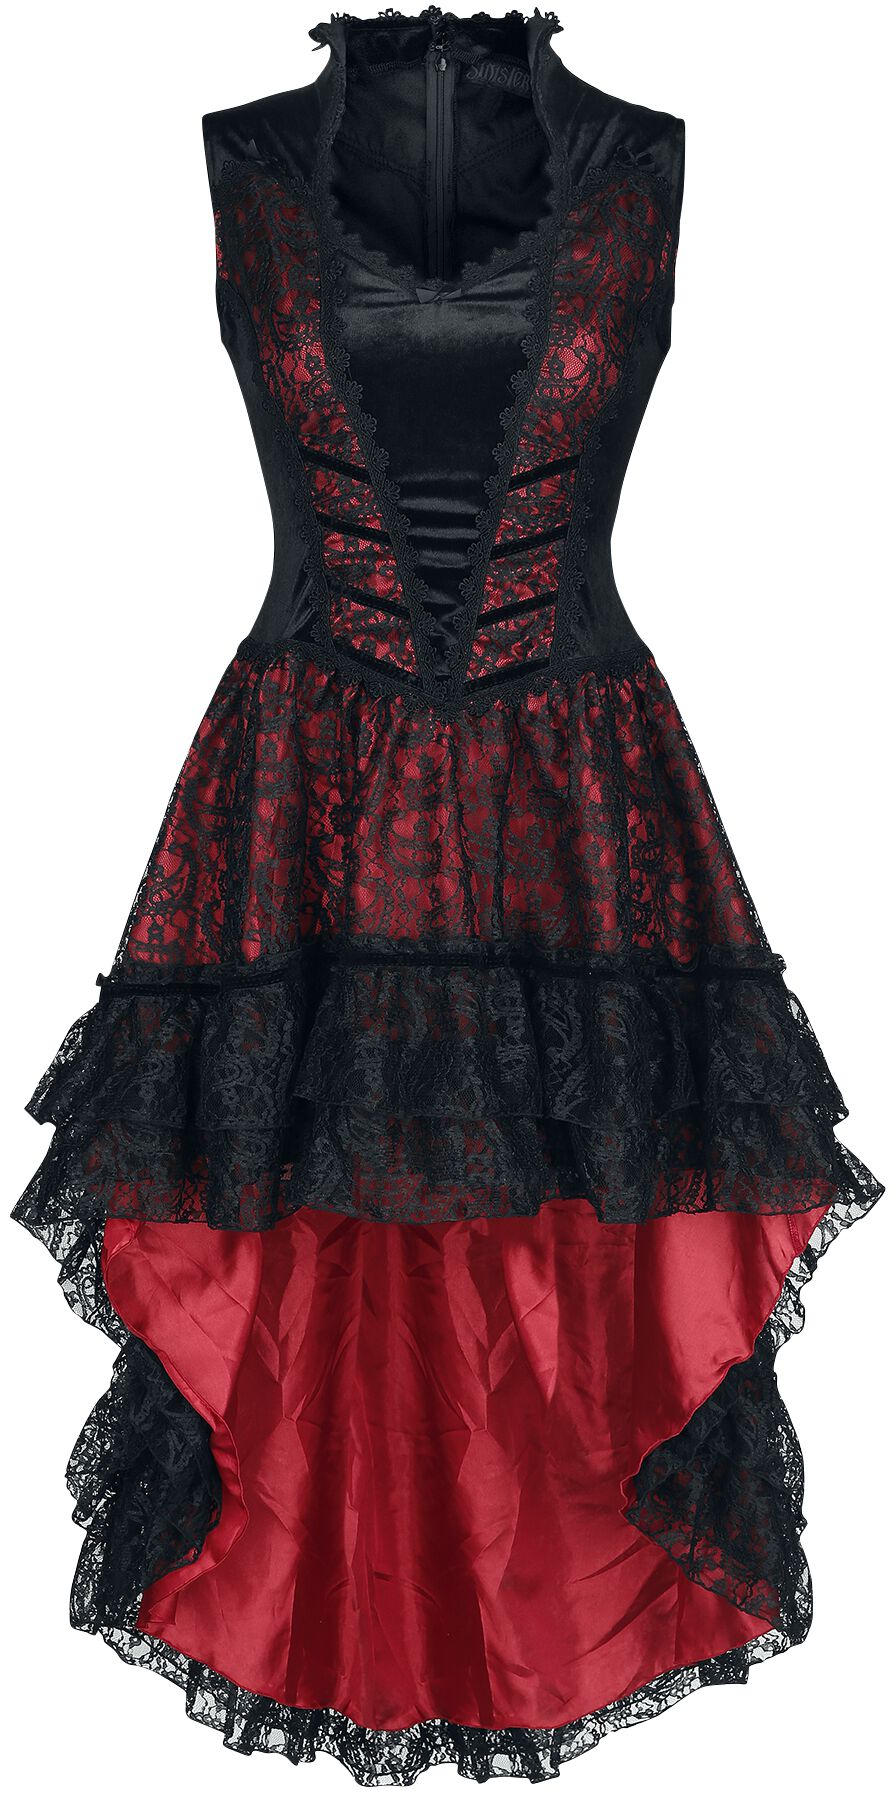 Sinister Gothic Gothic Dress Medium-length dress black red